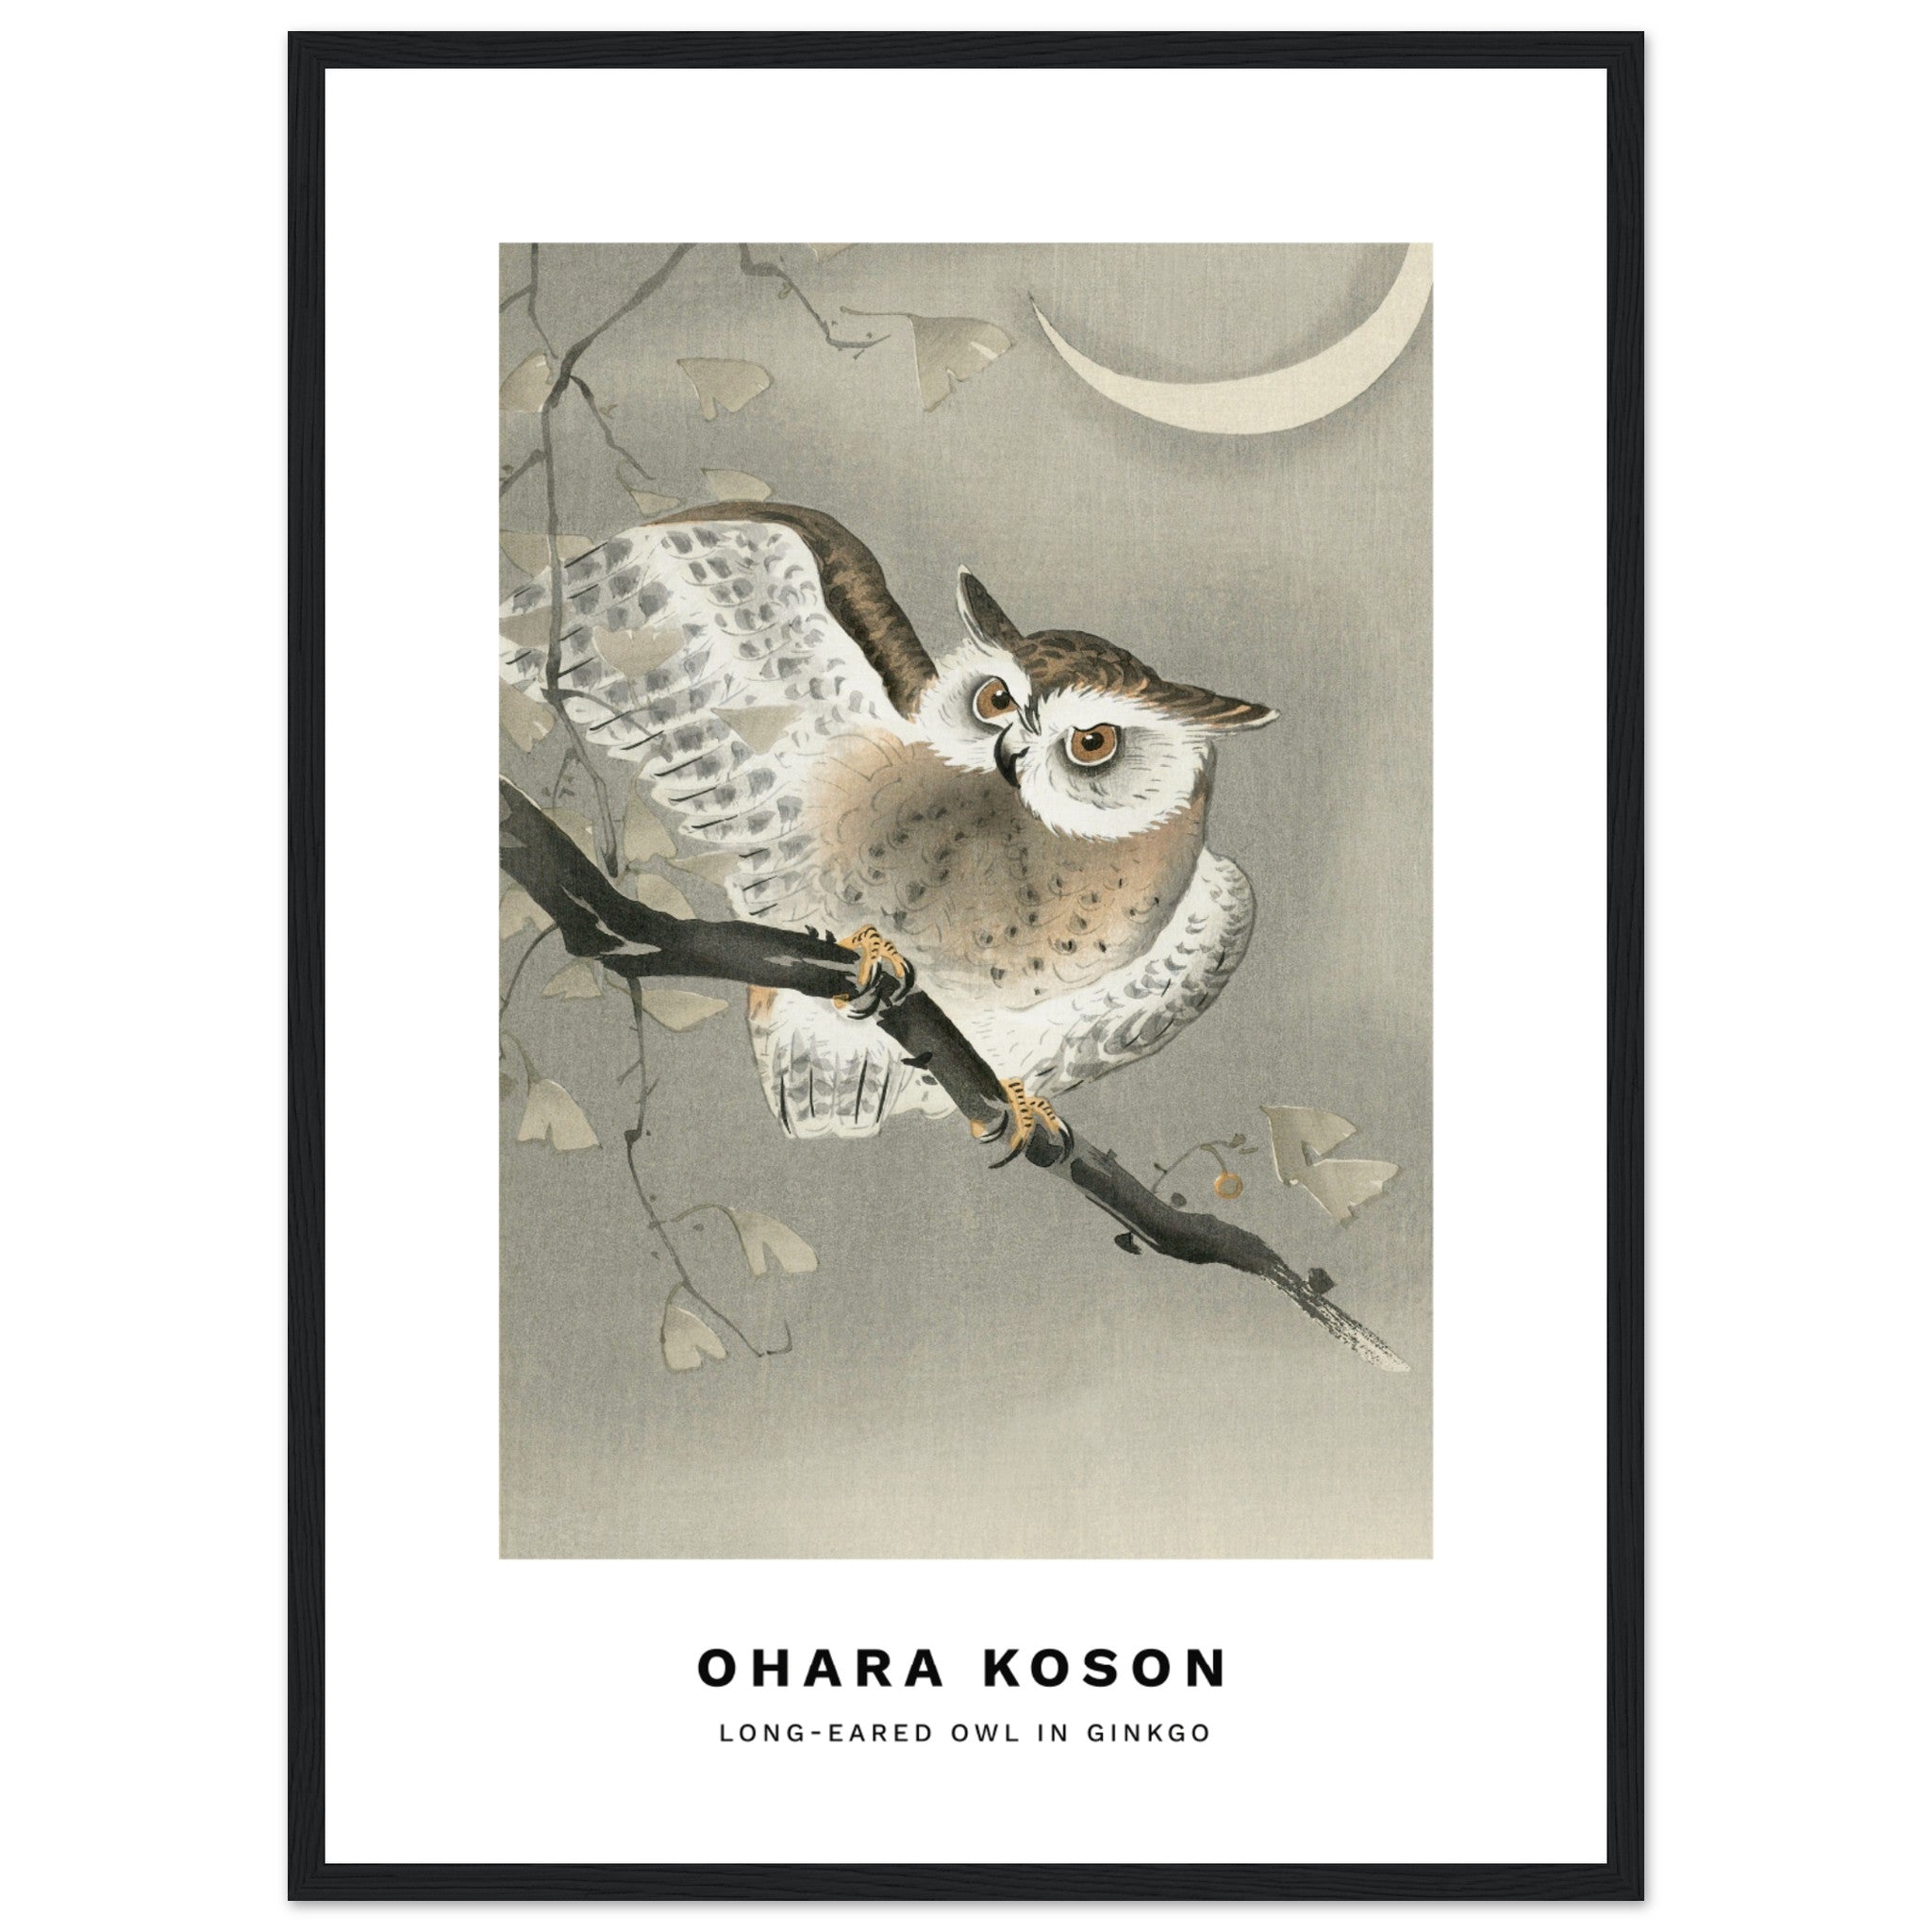 Long-eared owl in ginkgo by Ohara Koson Poster